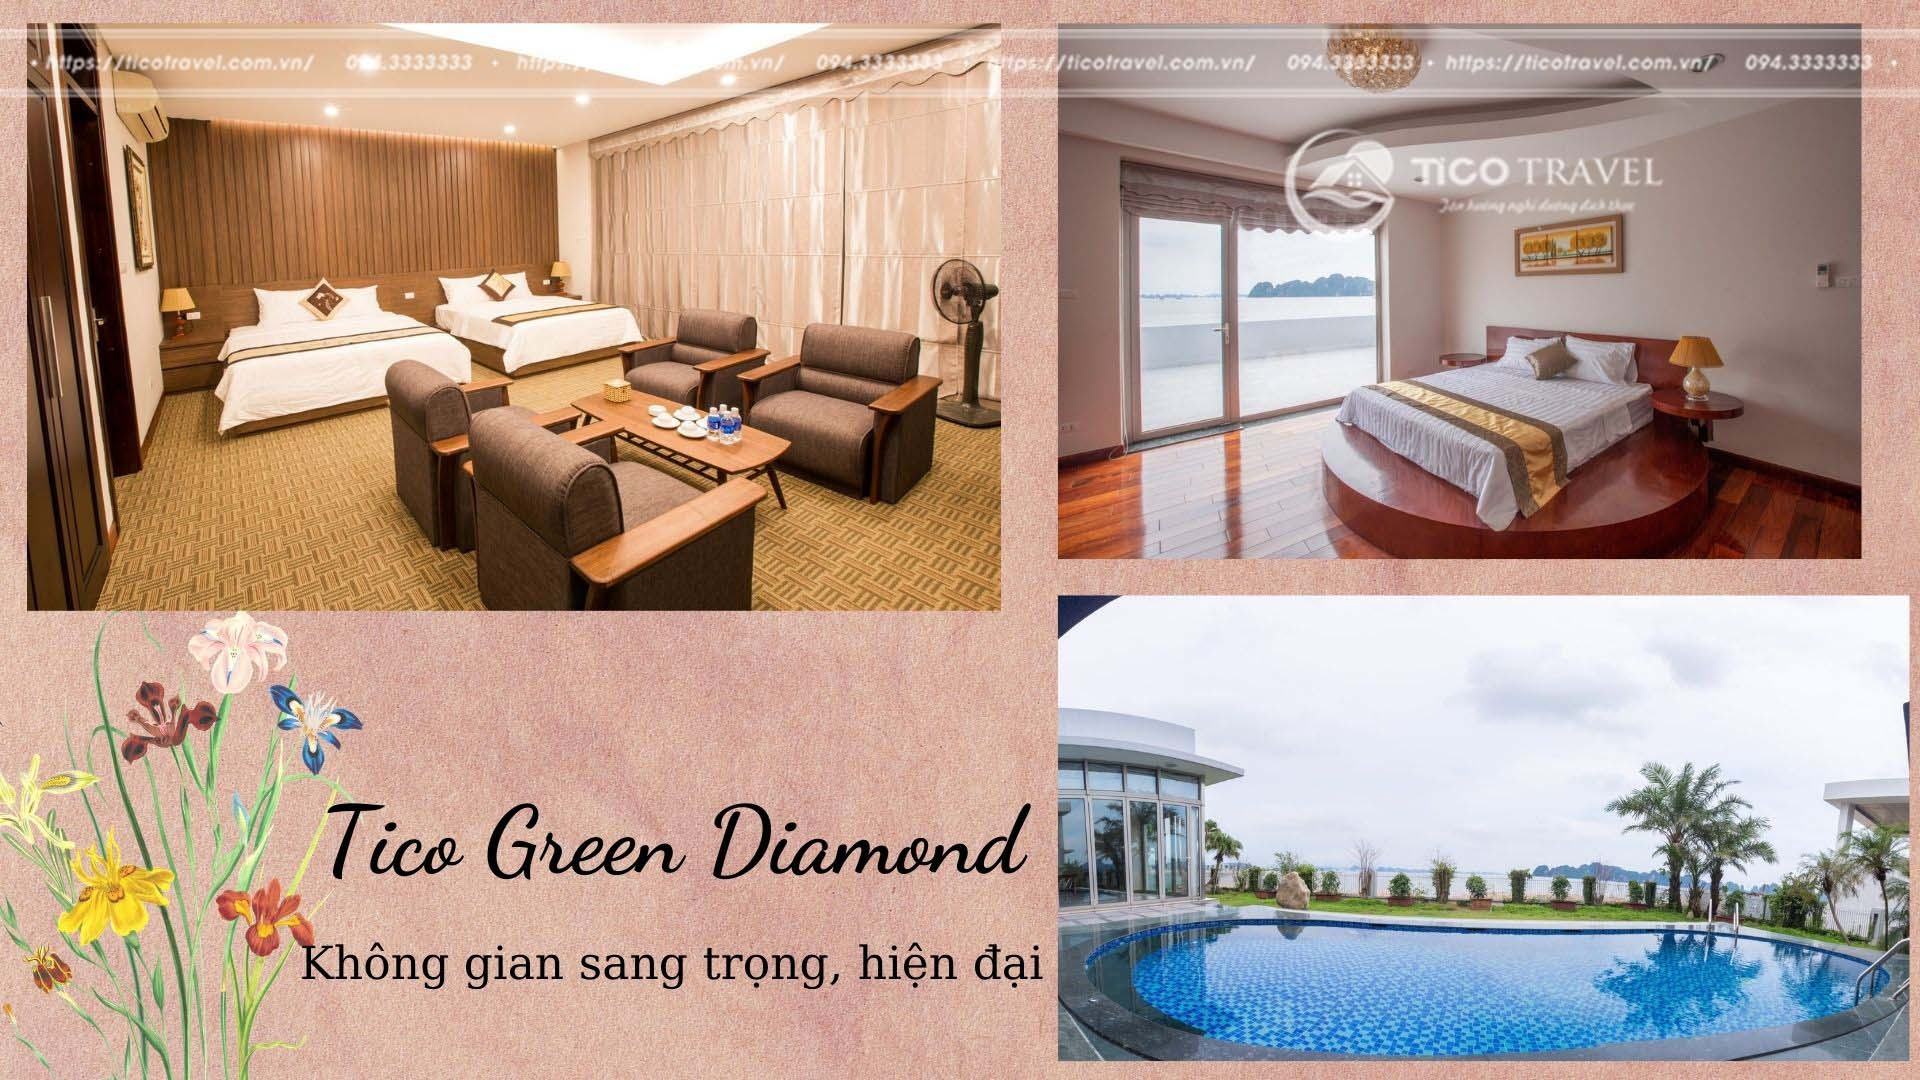 Villa Tico Green Diamond Hạ Long